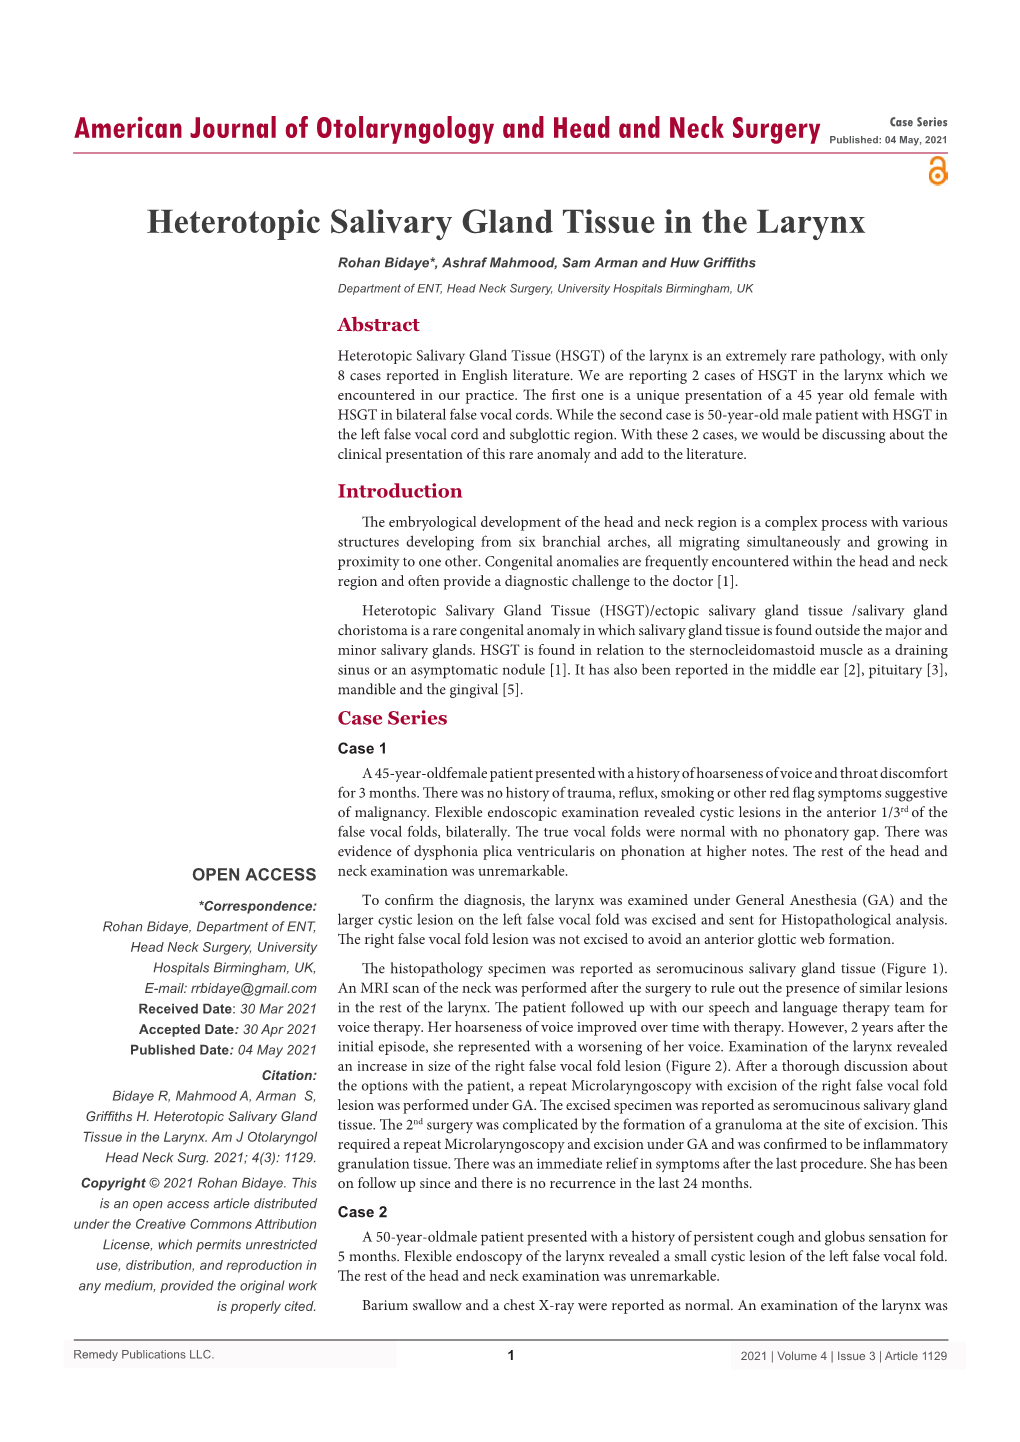 Heterotopic Salivary Gland Tissue in the Larynx